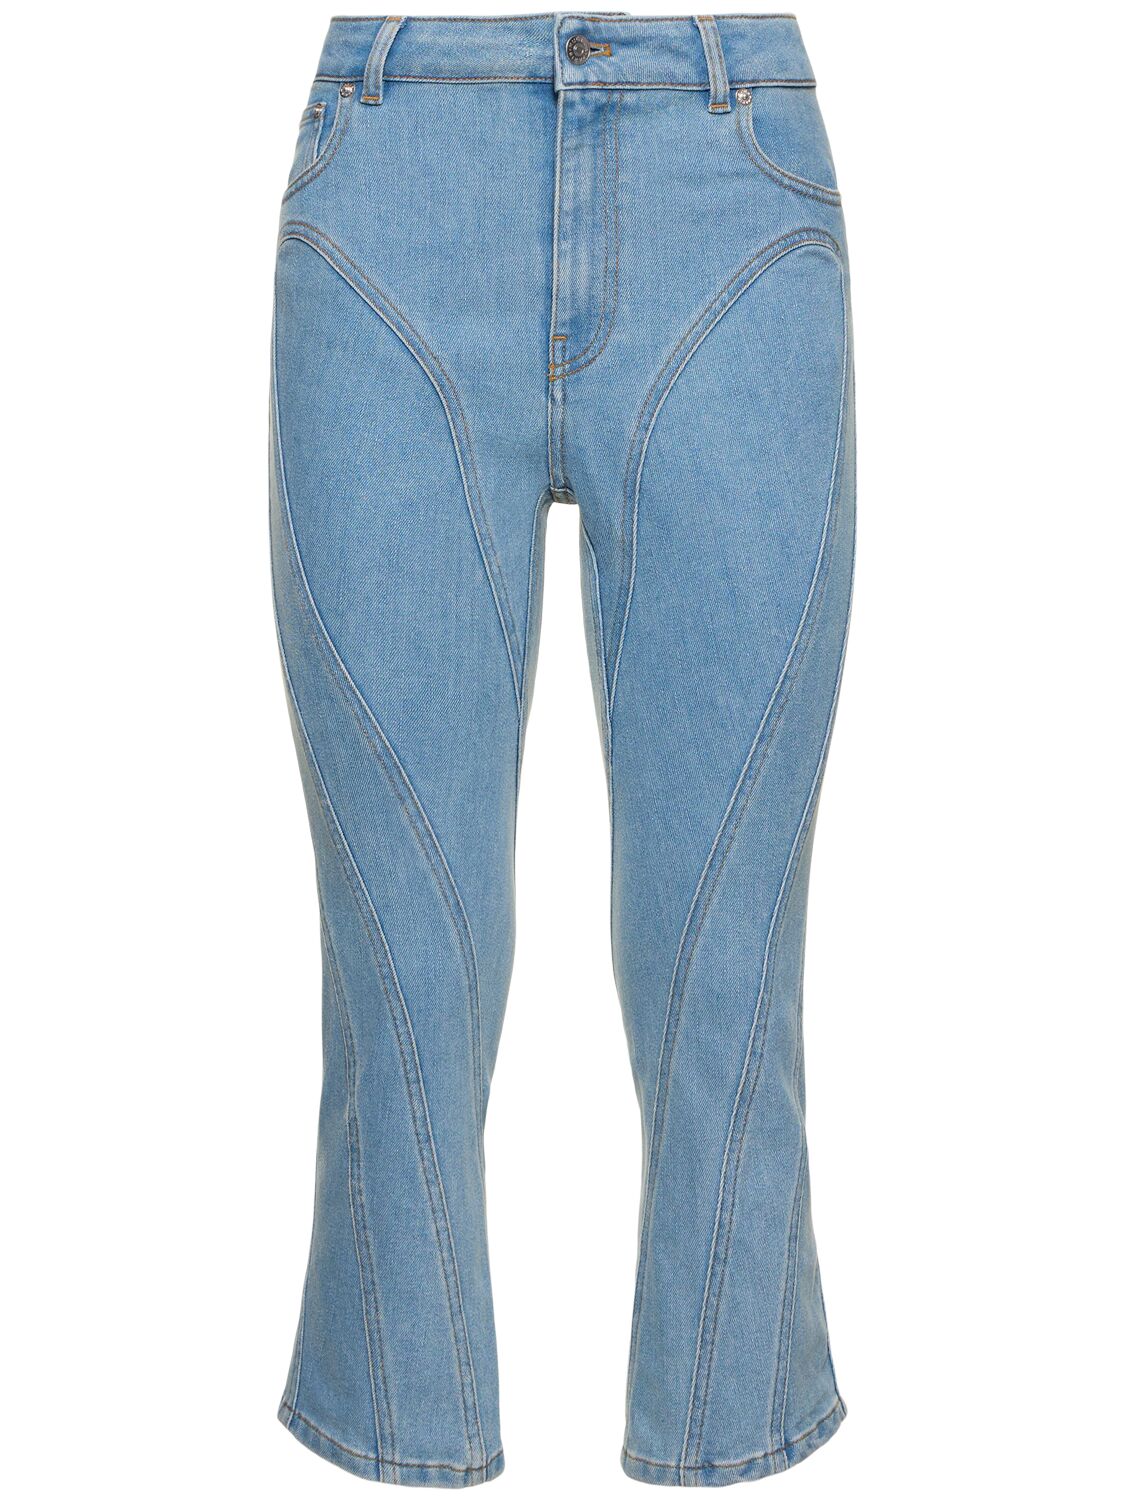 Shop Mugler Stretch Denim Cropped Jeans In Light Blue